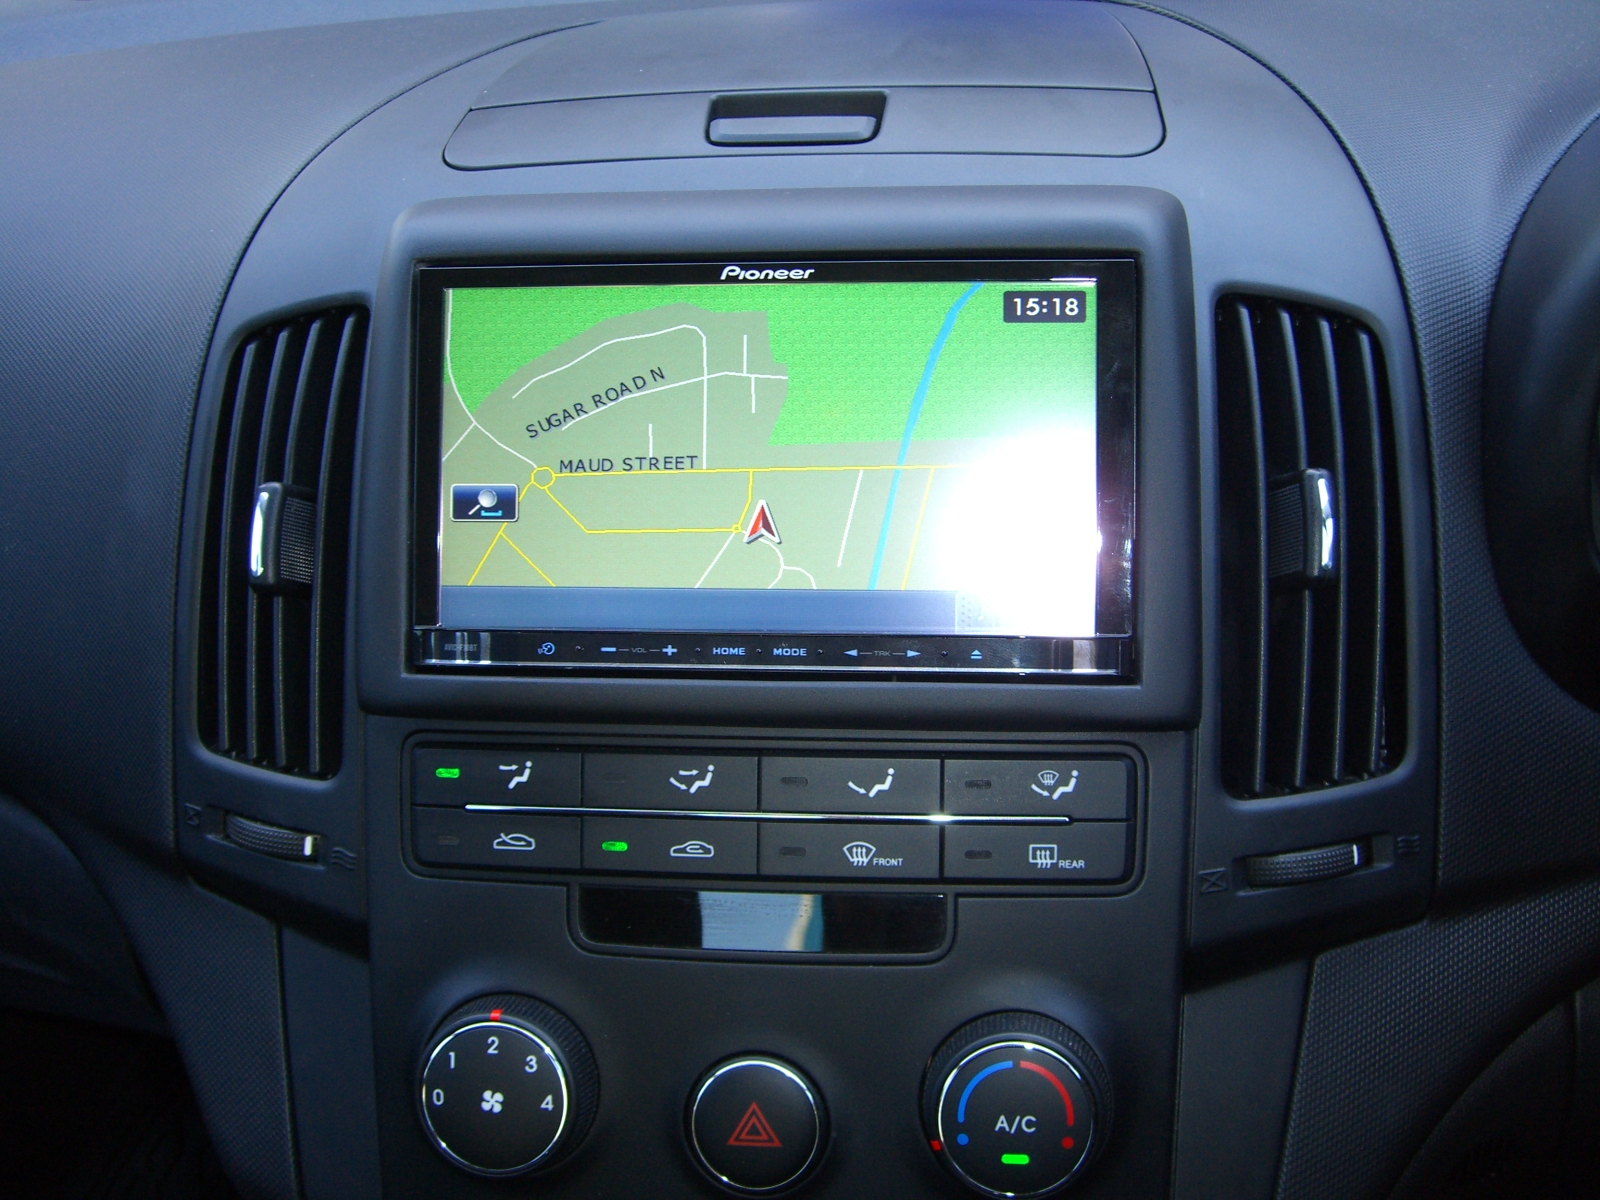 Hyundai i30 2015, Pioneer GPS Navigation Installation